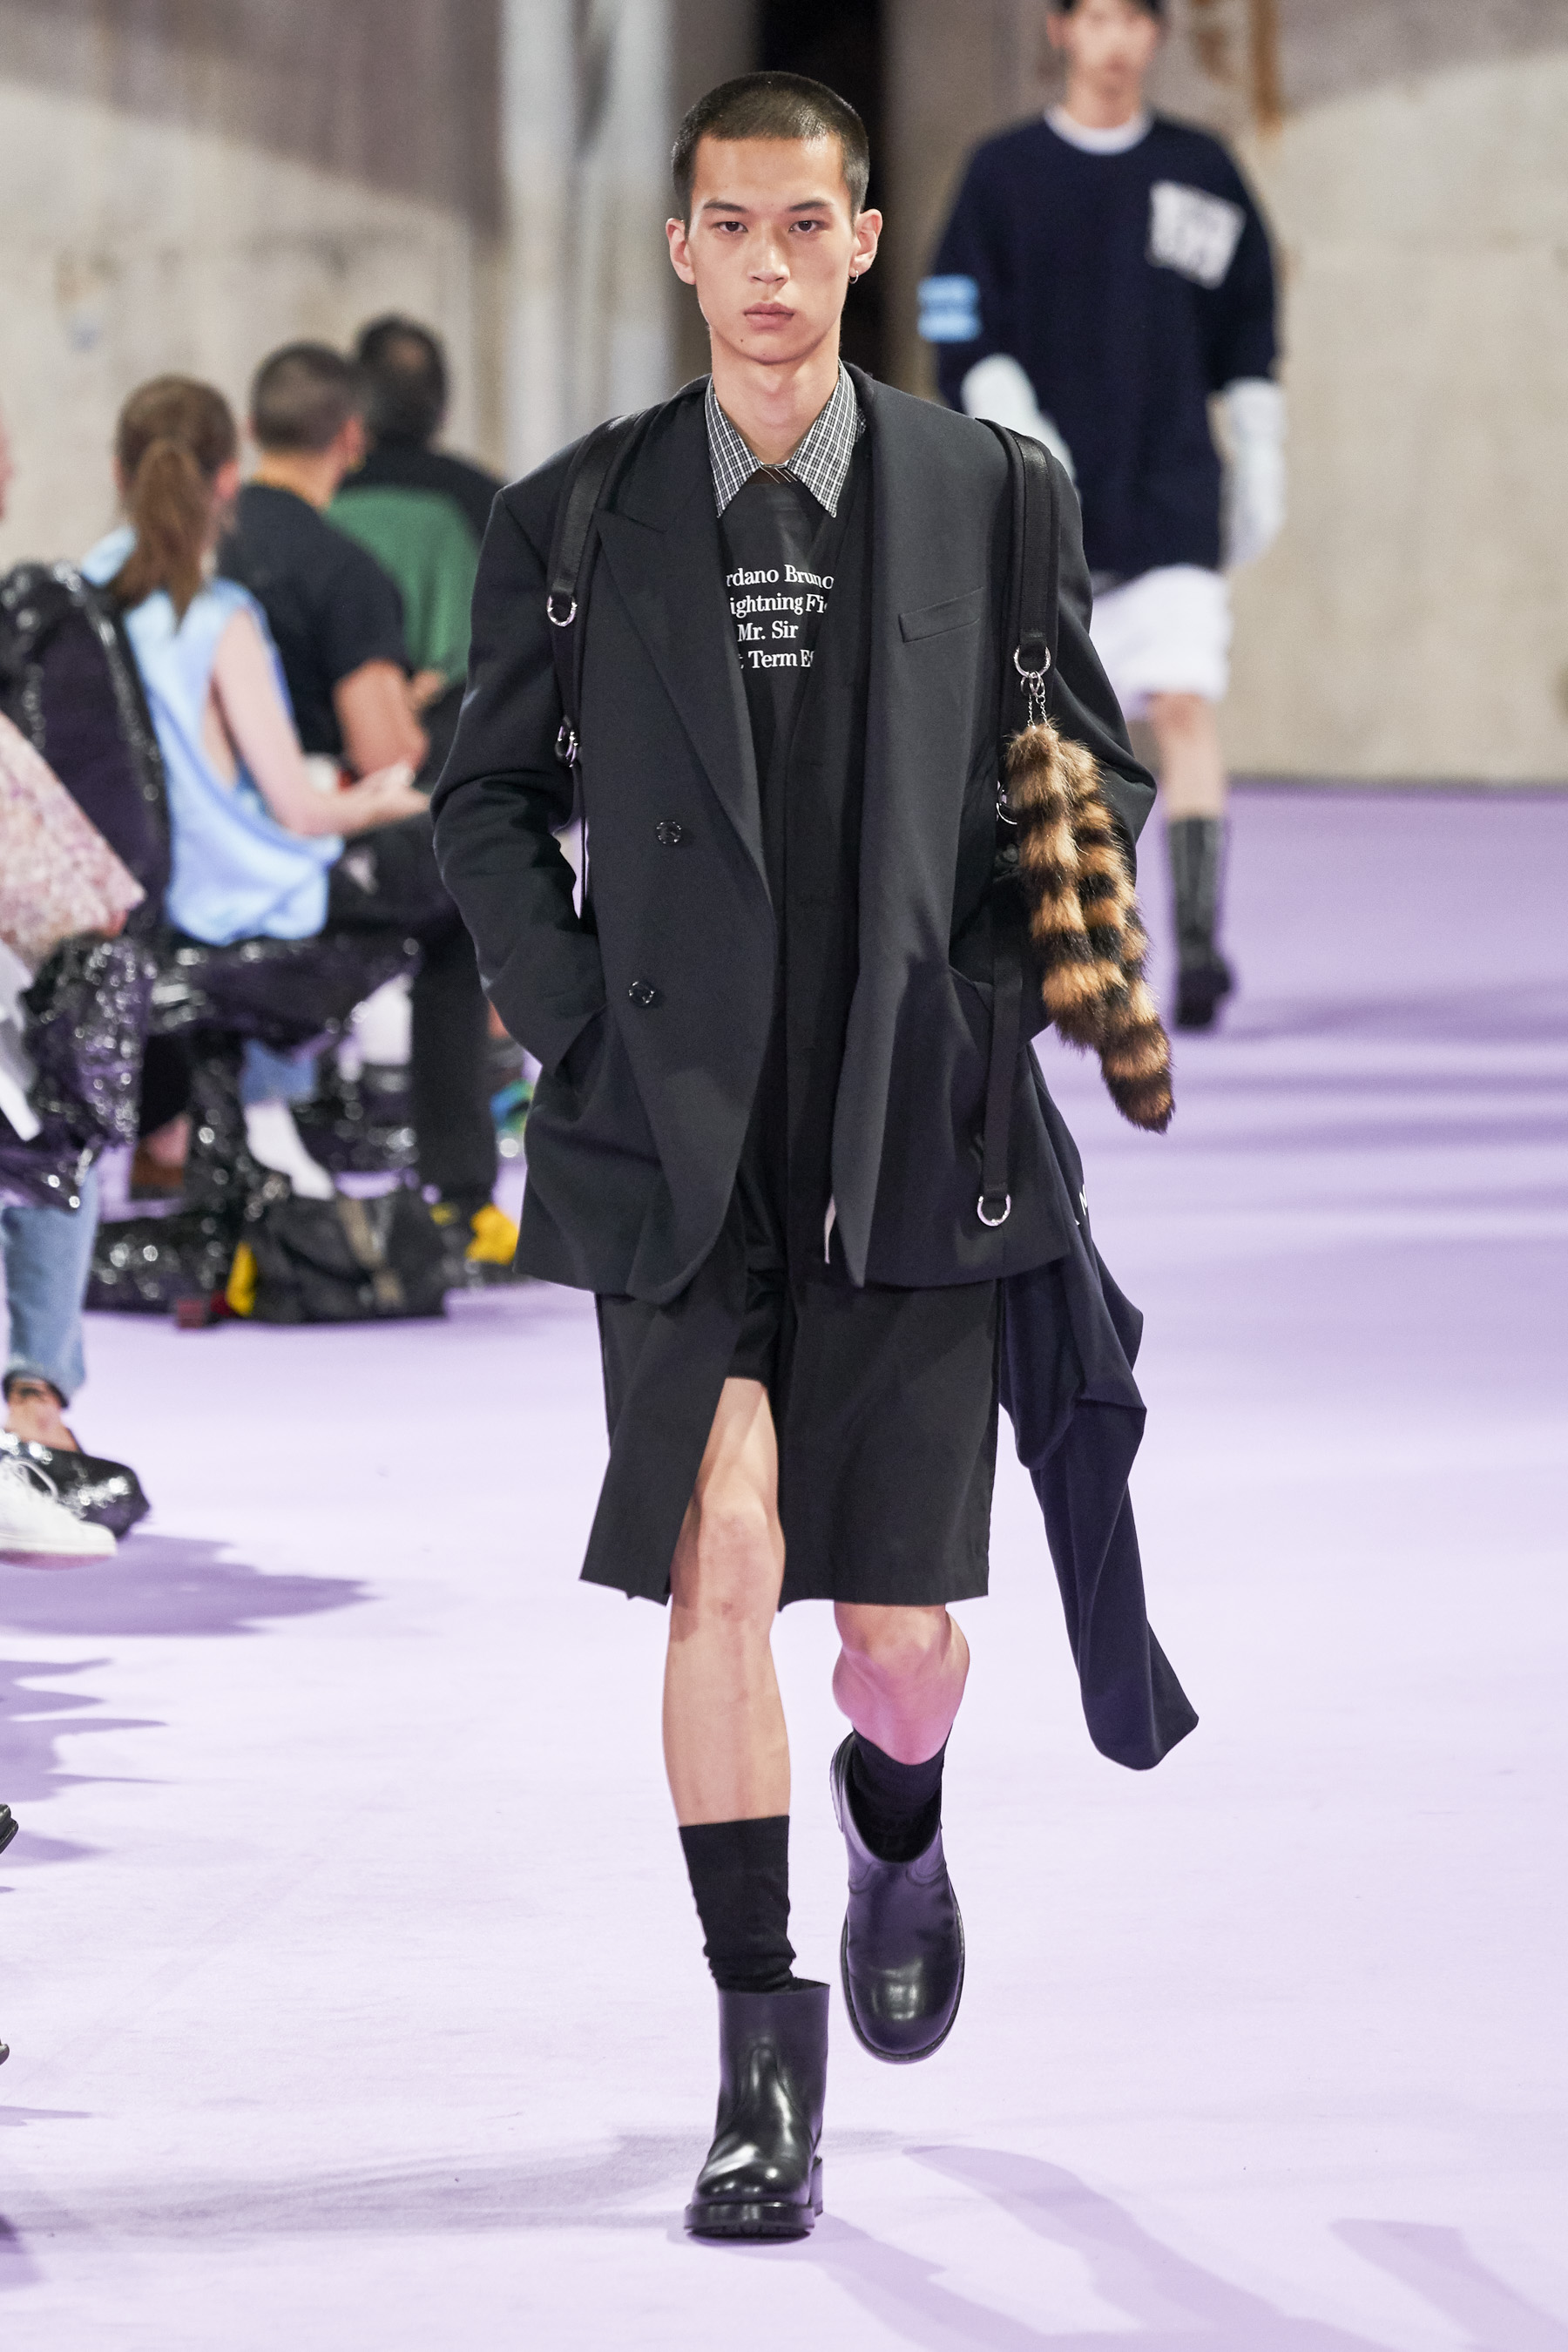 Paris Top 10 Spring 2020 Men's Fashion Shows | The Impression